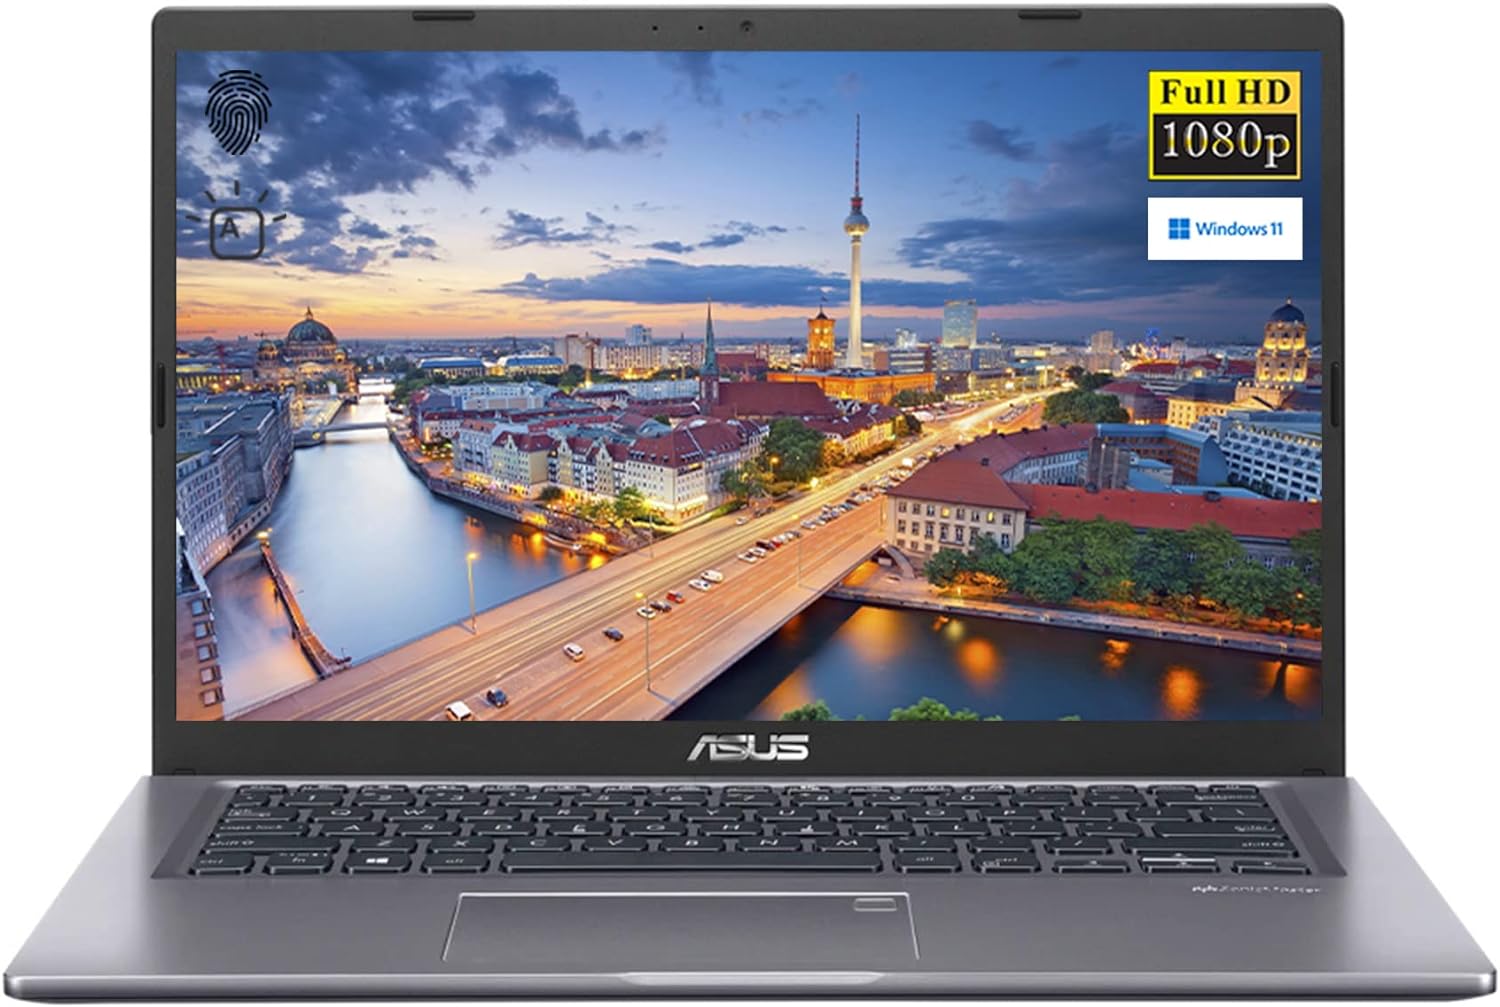 ASUS VivoBook 14 FHD 1080p Laptop, Intel Core i3-1115G4, 8GB RAM, 512GB PCIe SSD, Backlit Keyboard, HDMI, WiFi, Webcam, Windows 11 Home, Slate Grey